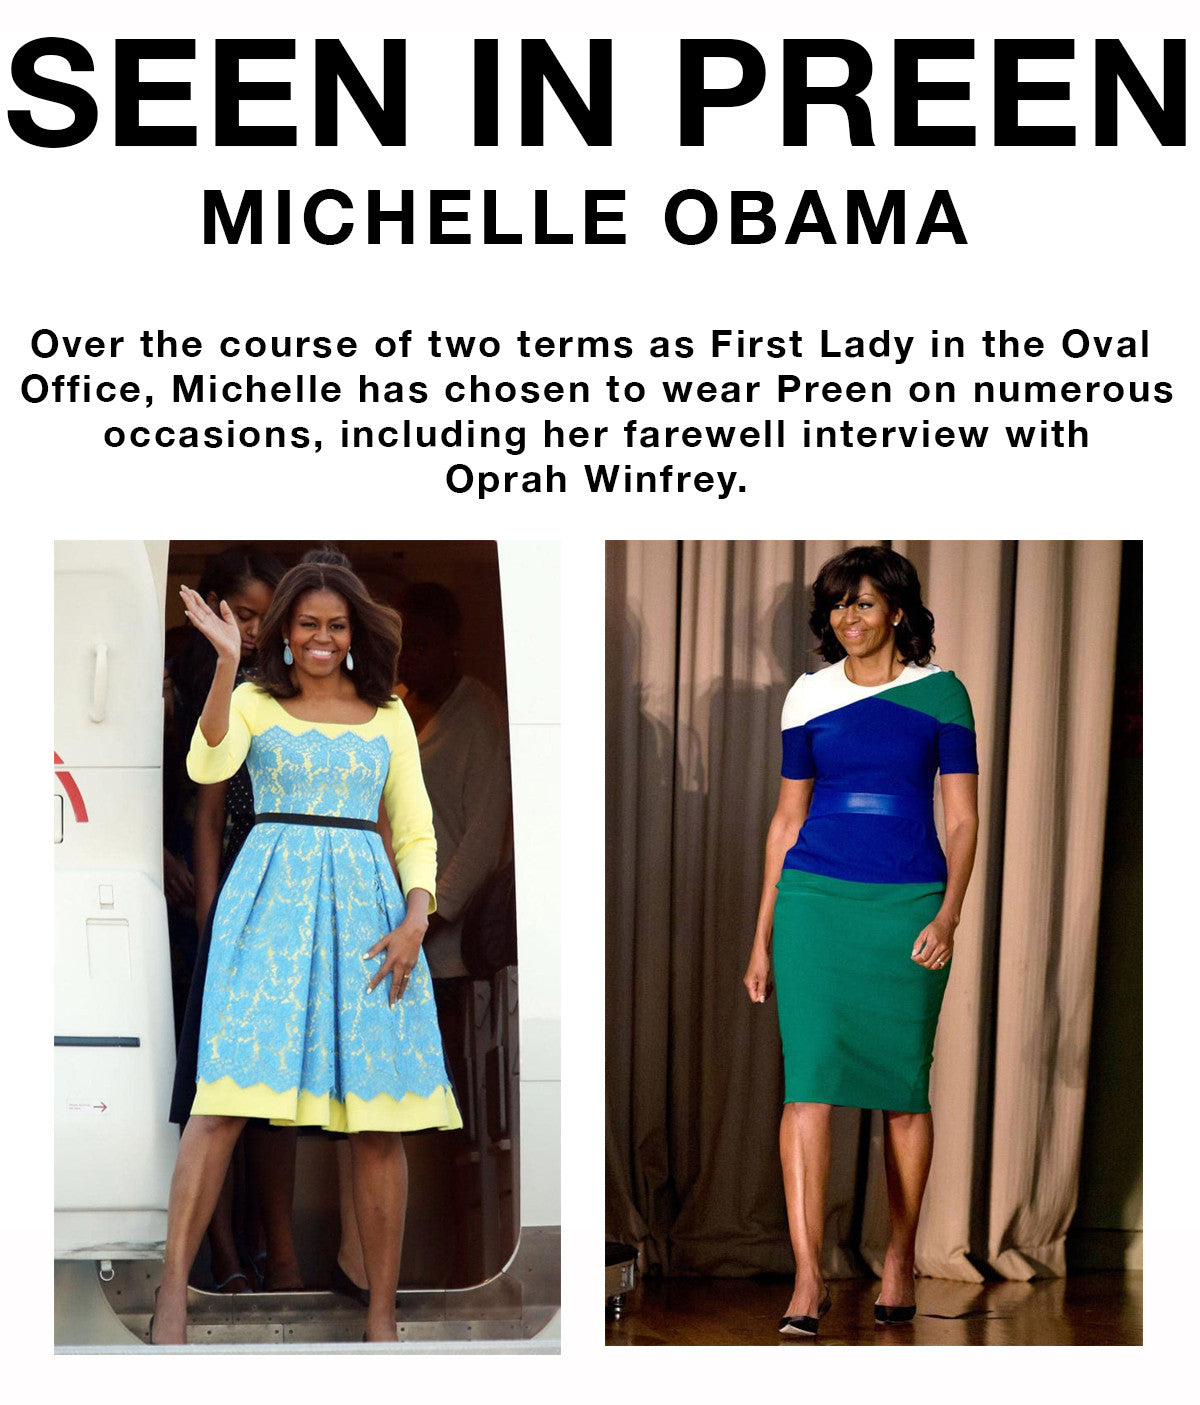 Michelle Obama seen in Preen